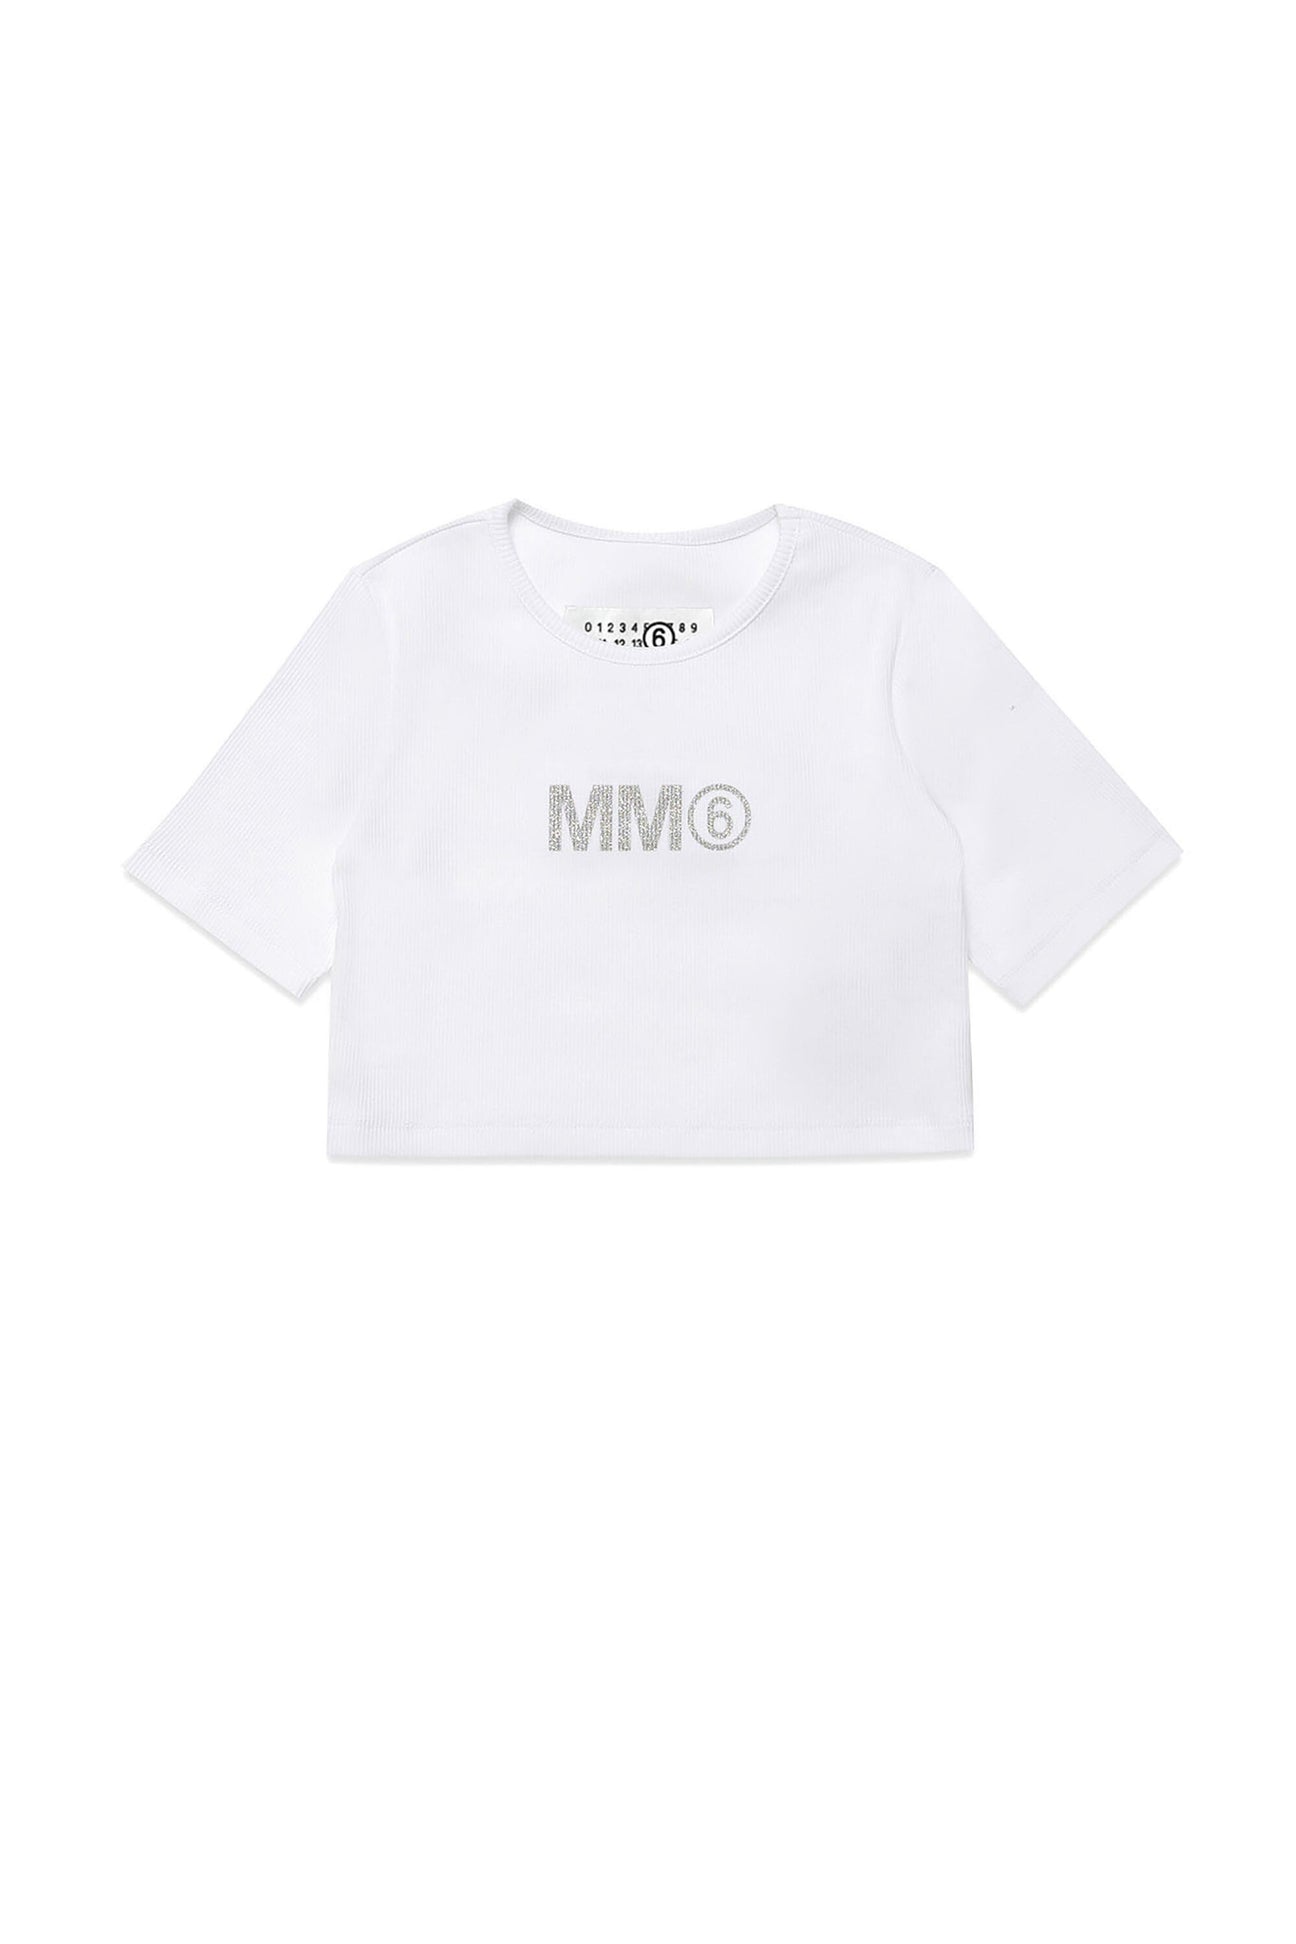 MM6グリッターロゴ入りリブ編みTシャツ 